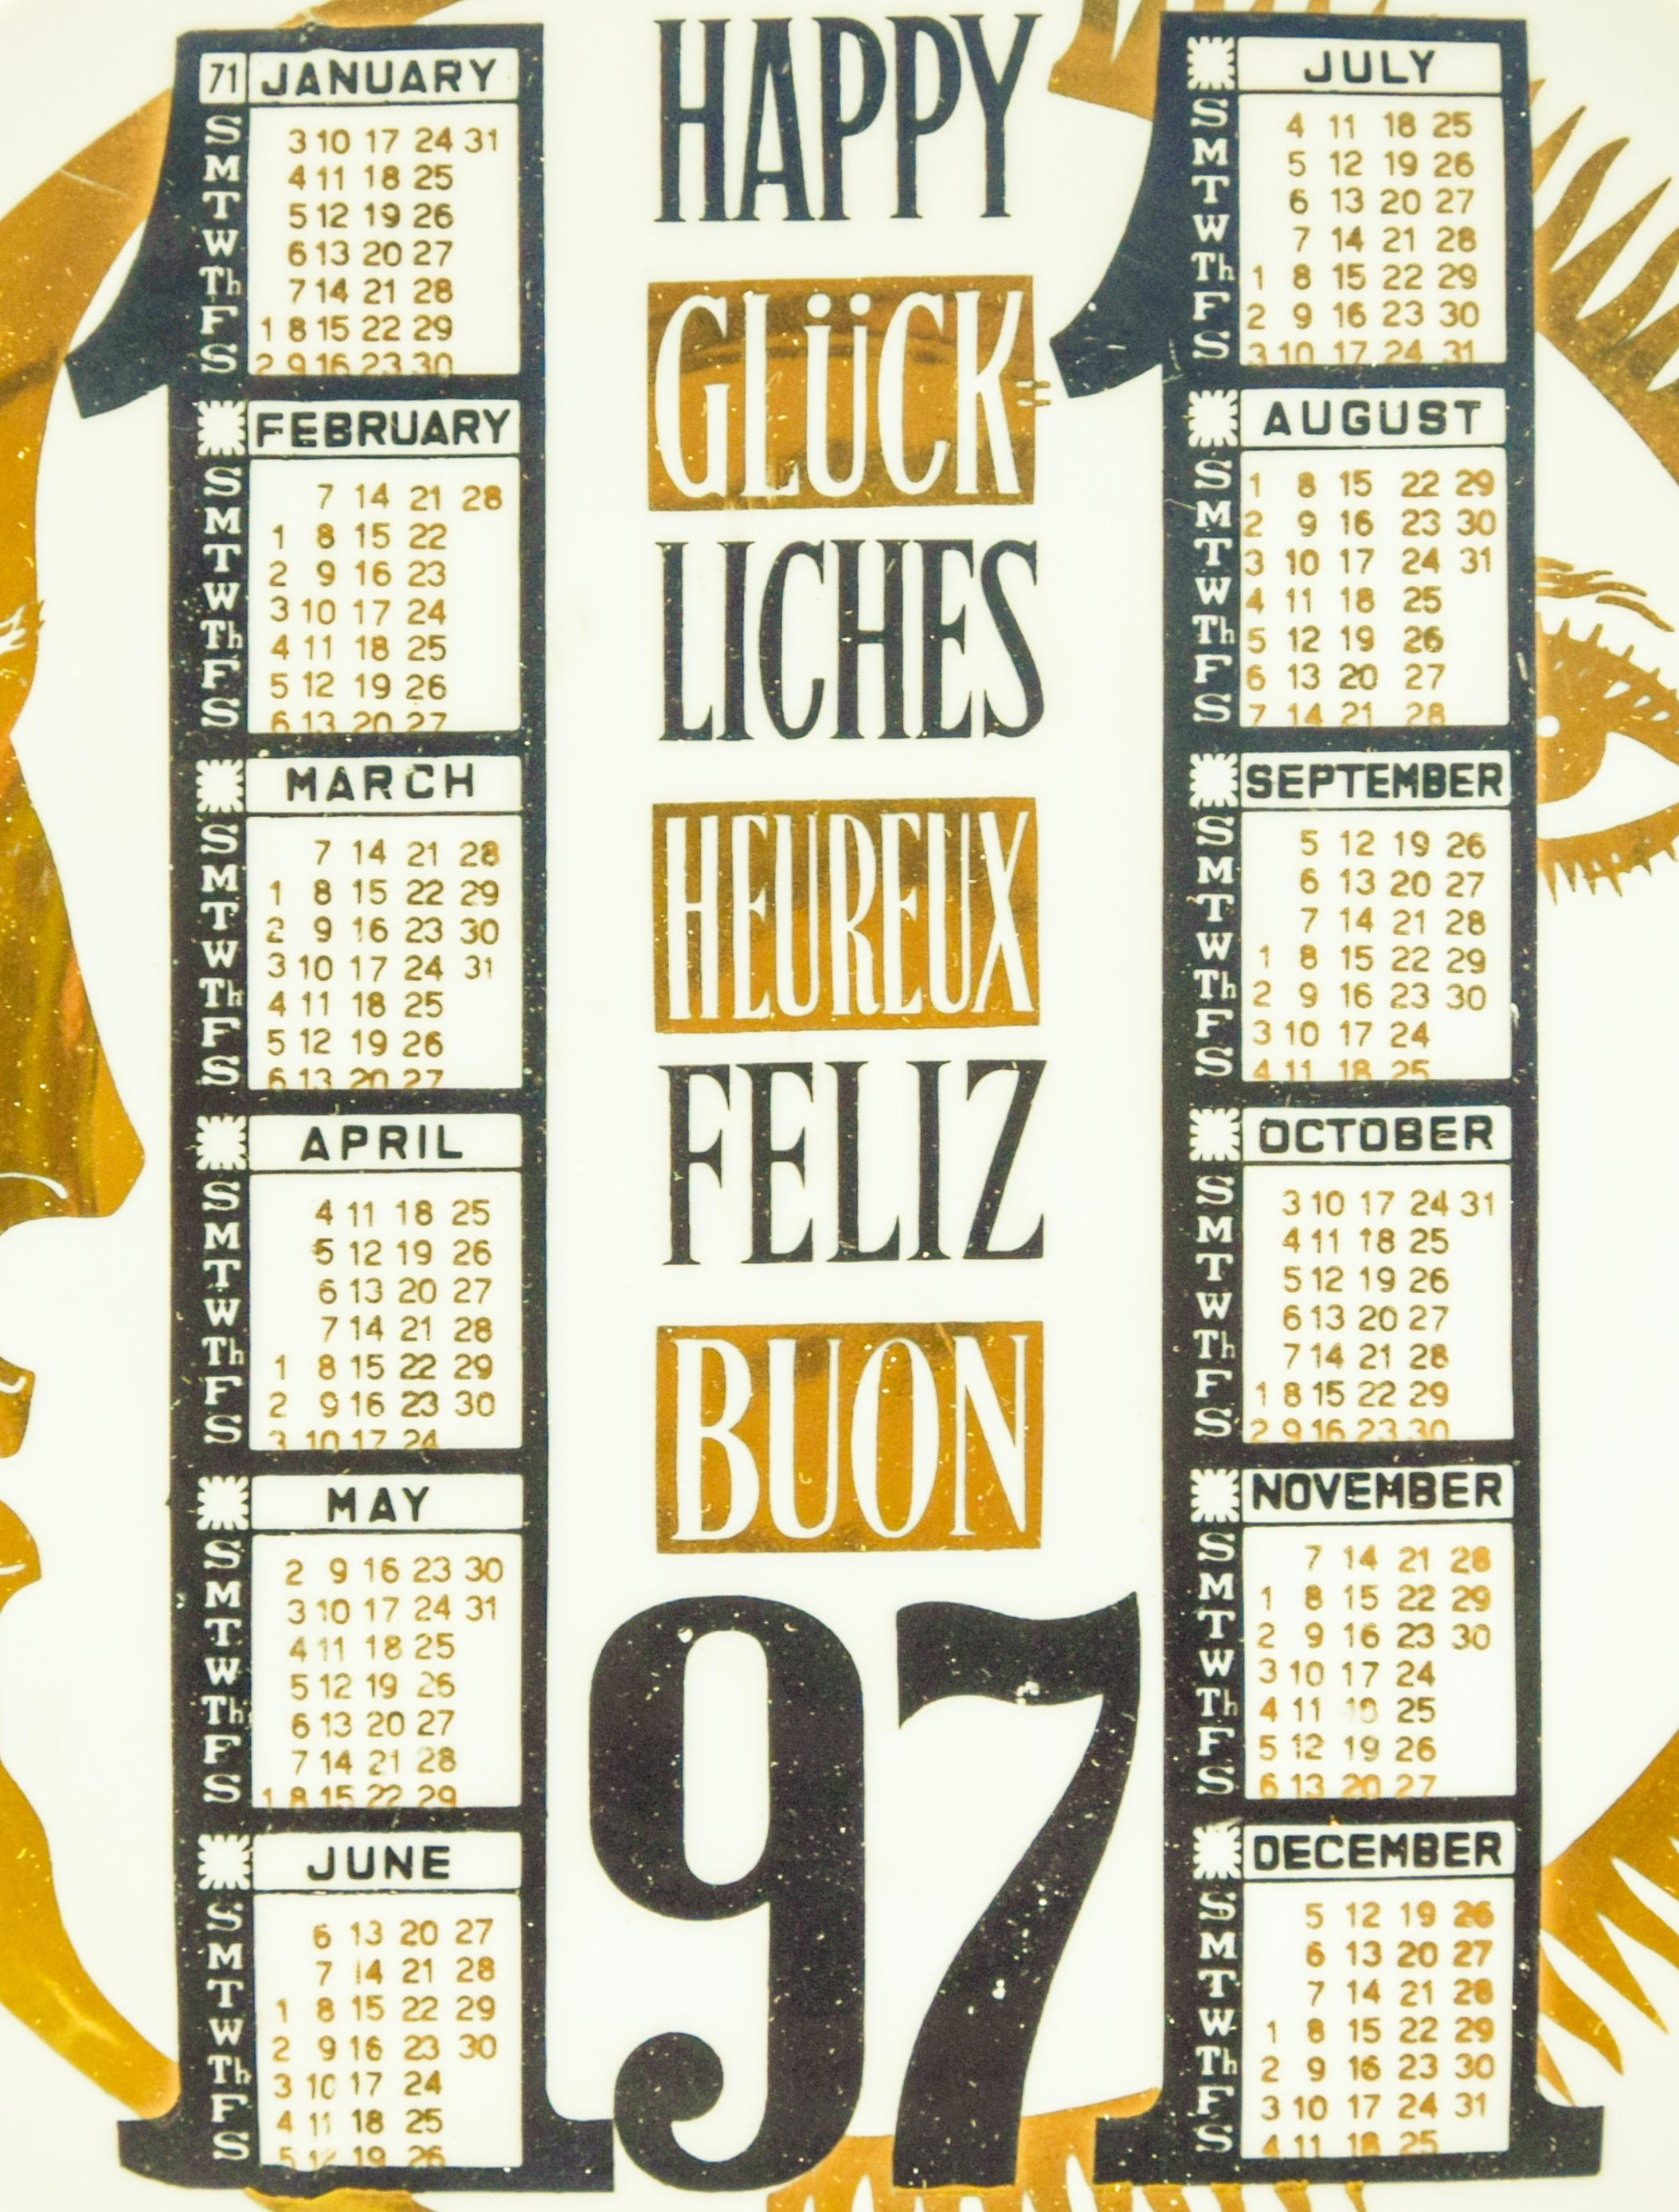 1971 calendar year